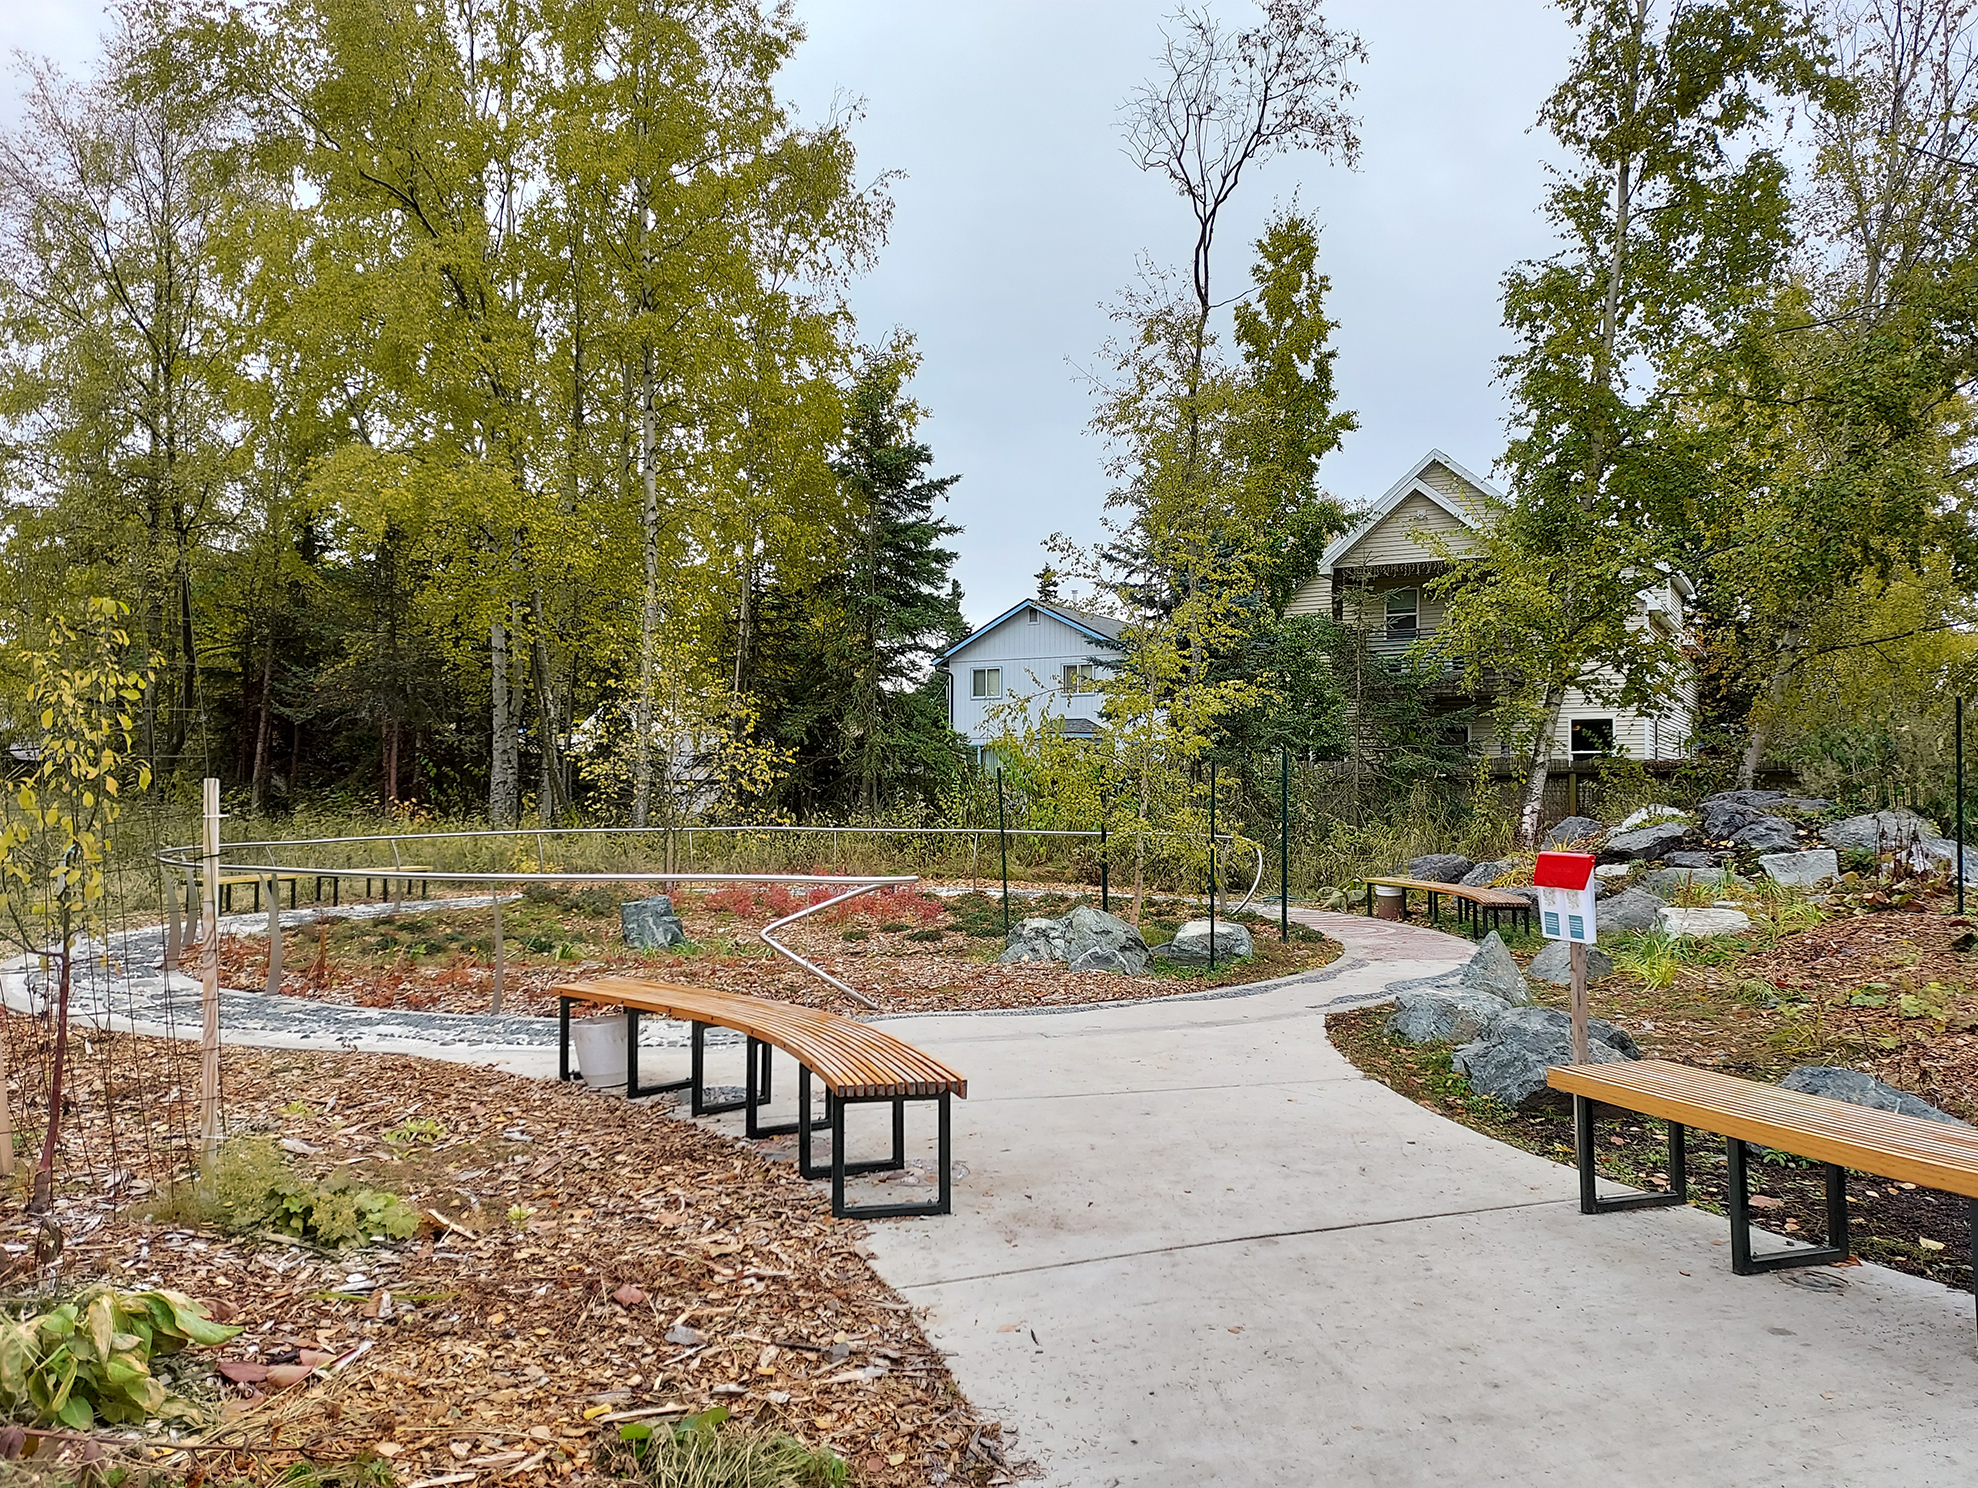 Reflexology path in park